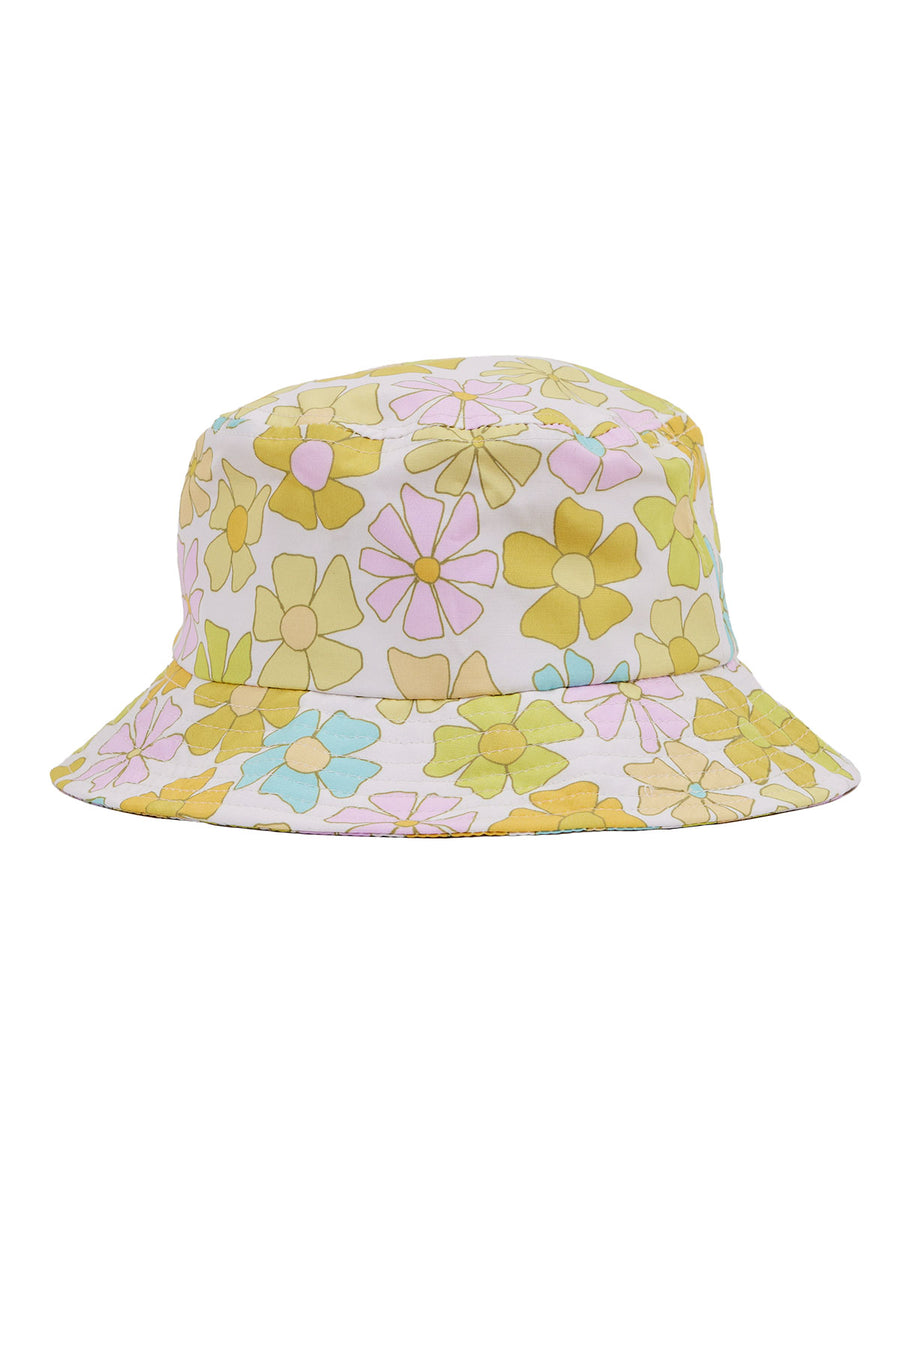 Seaesta Surf x Surfy Birdy / Groovy Floral / Bucket Hat